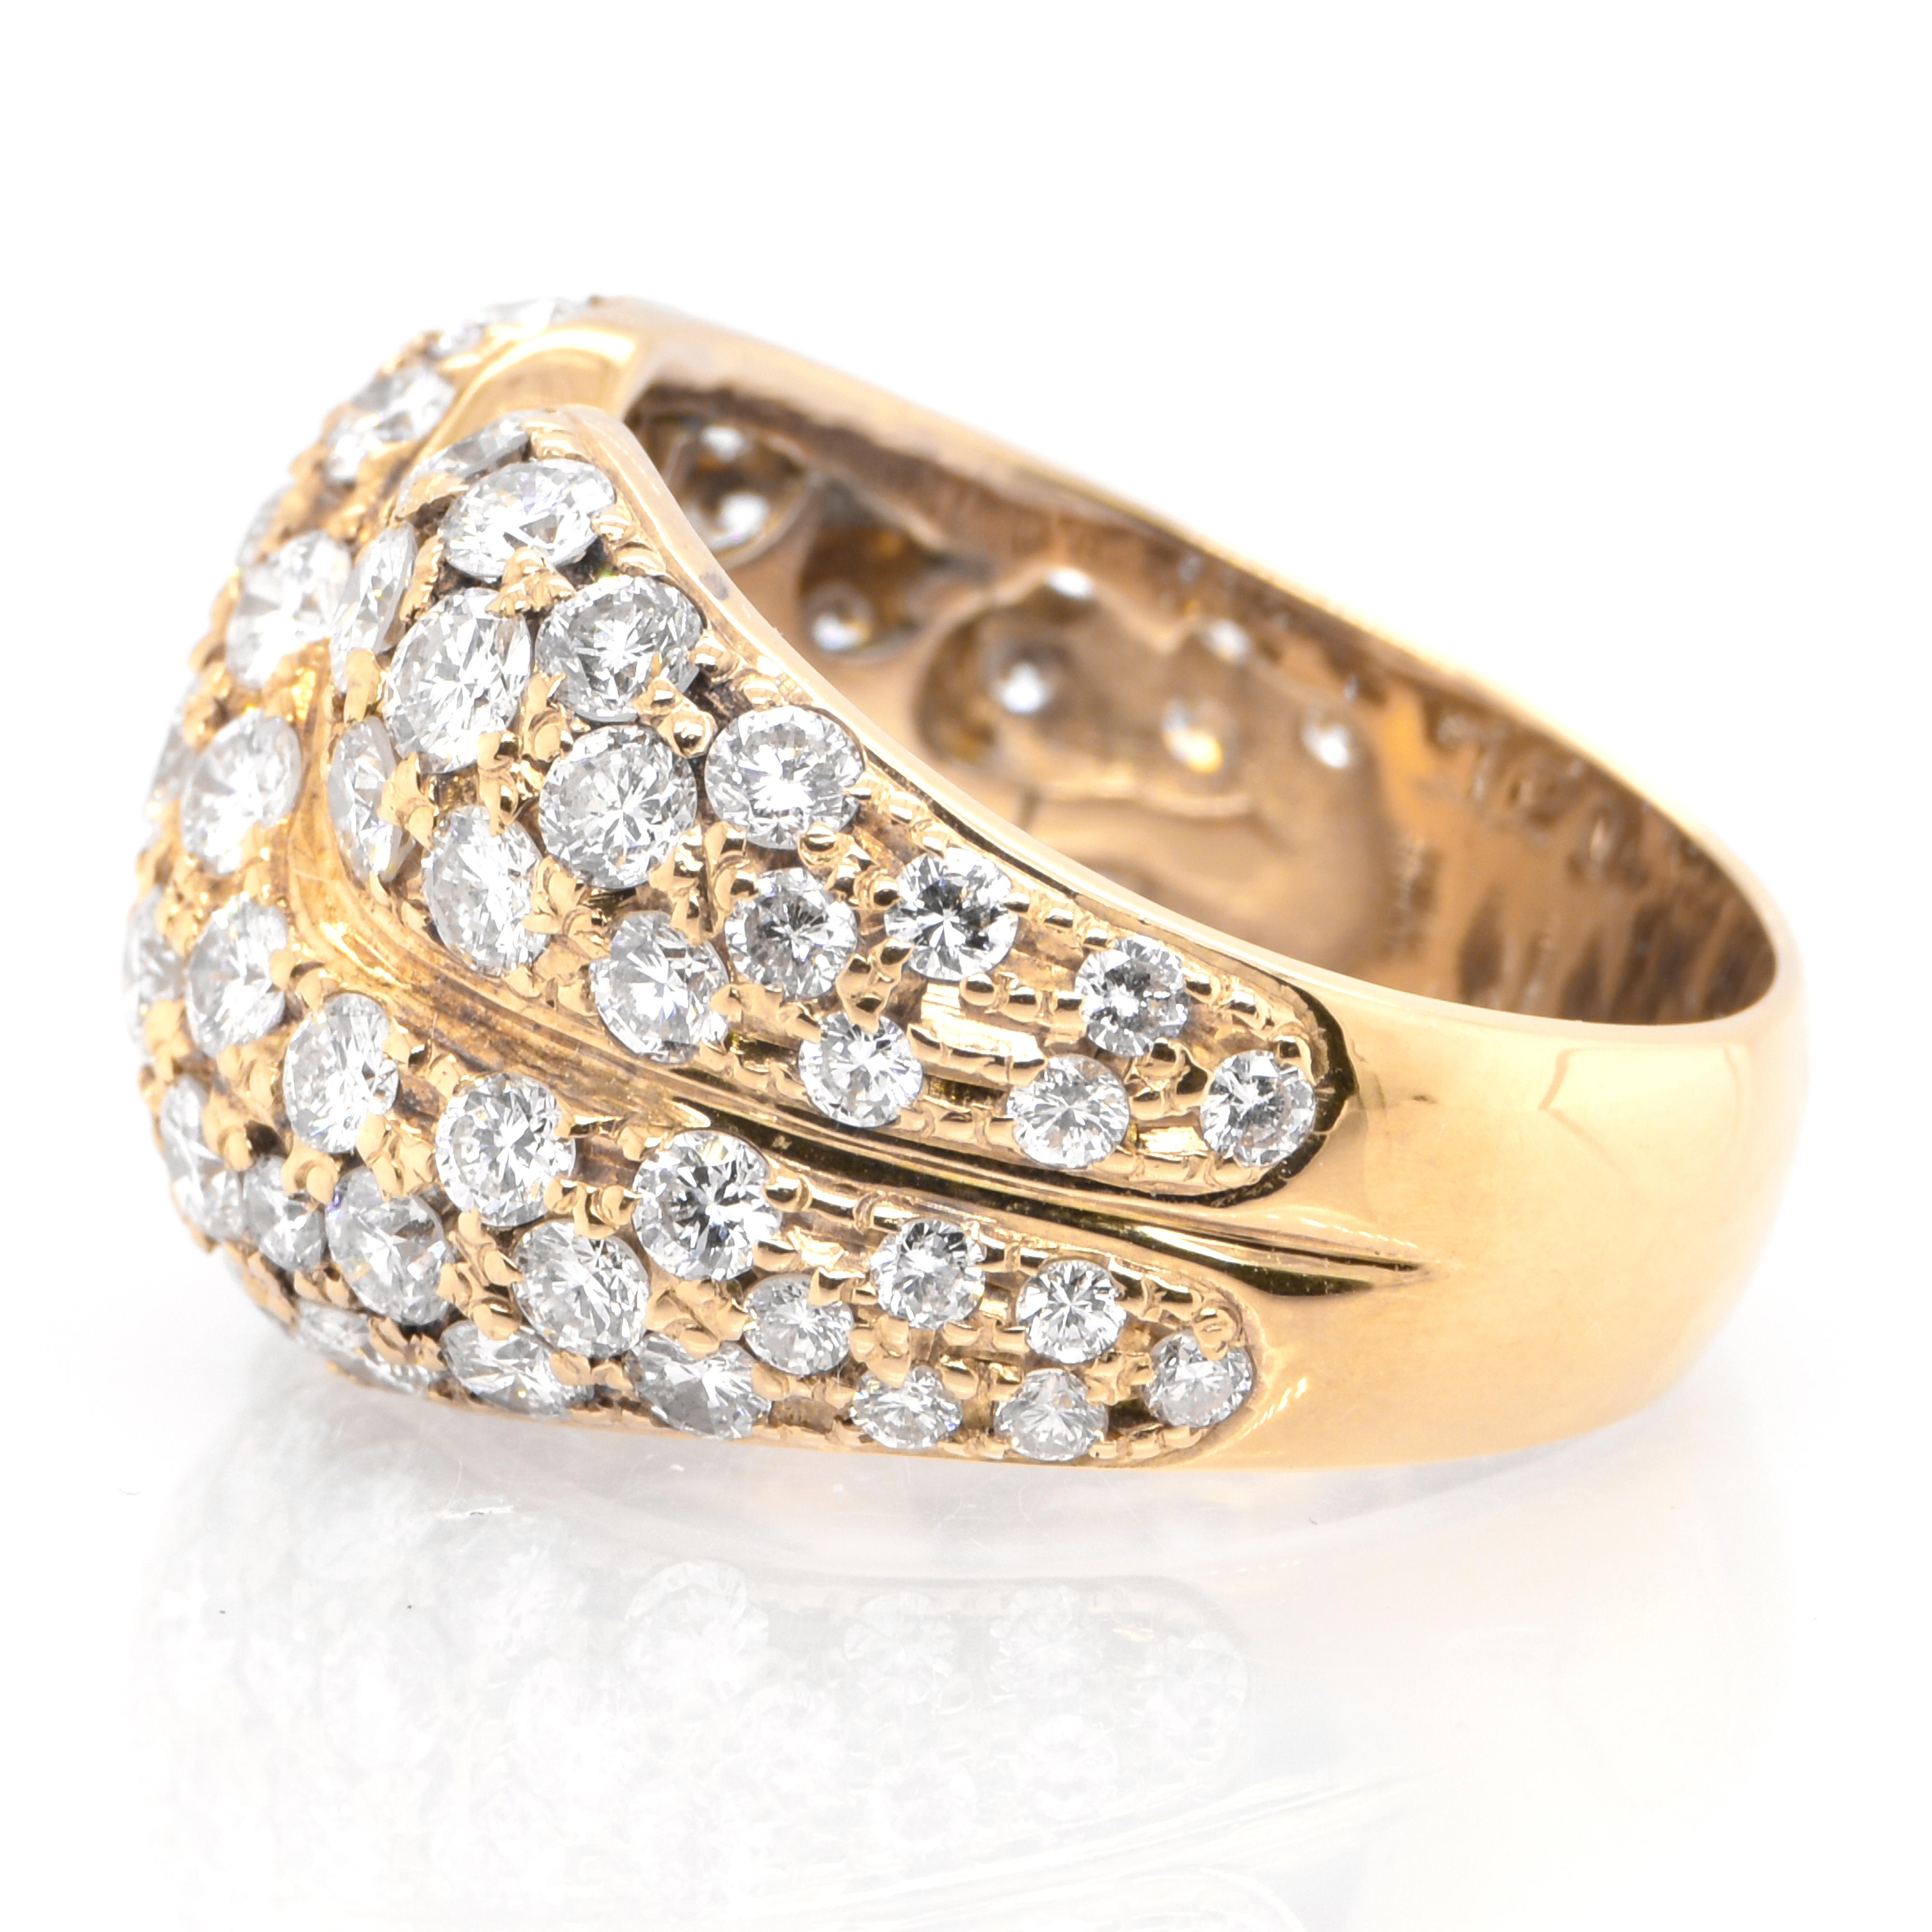 Round Cut 3.20 Carats Diamond Cluster Ring Set in 18 Karat Yellow Gold